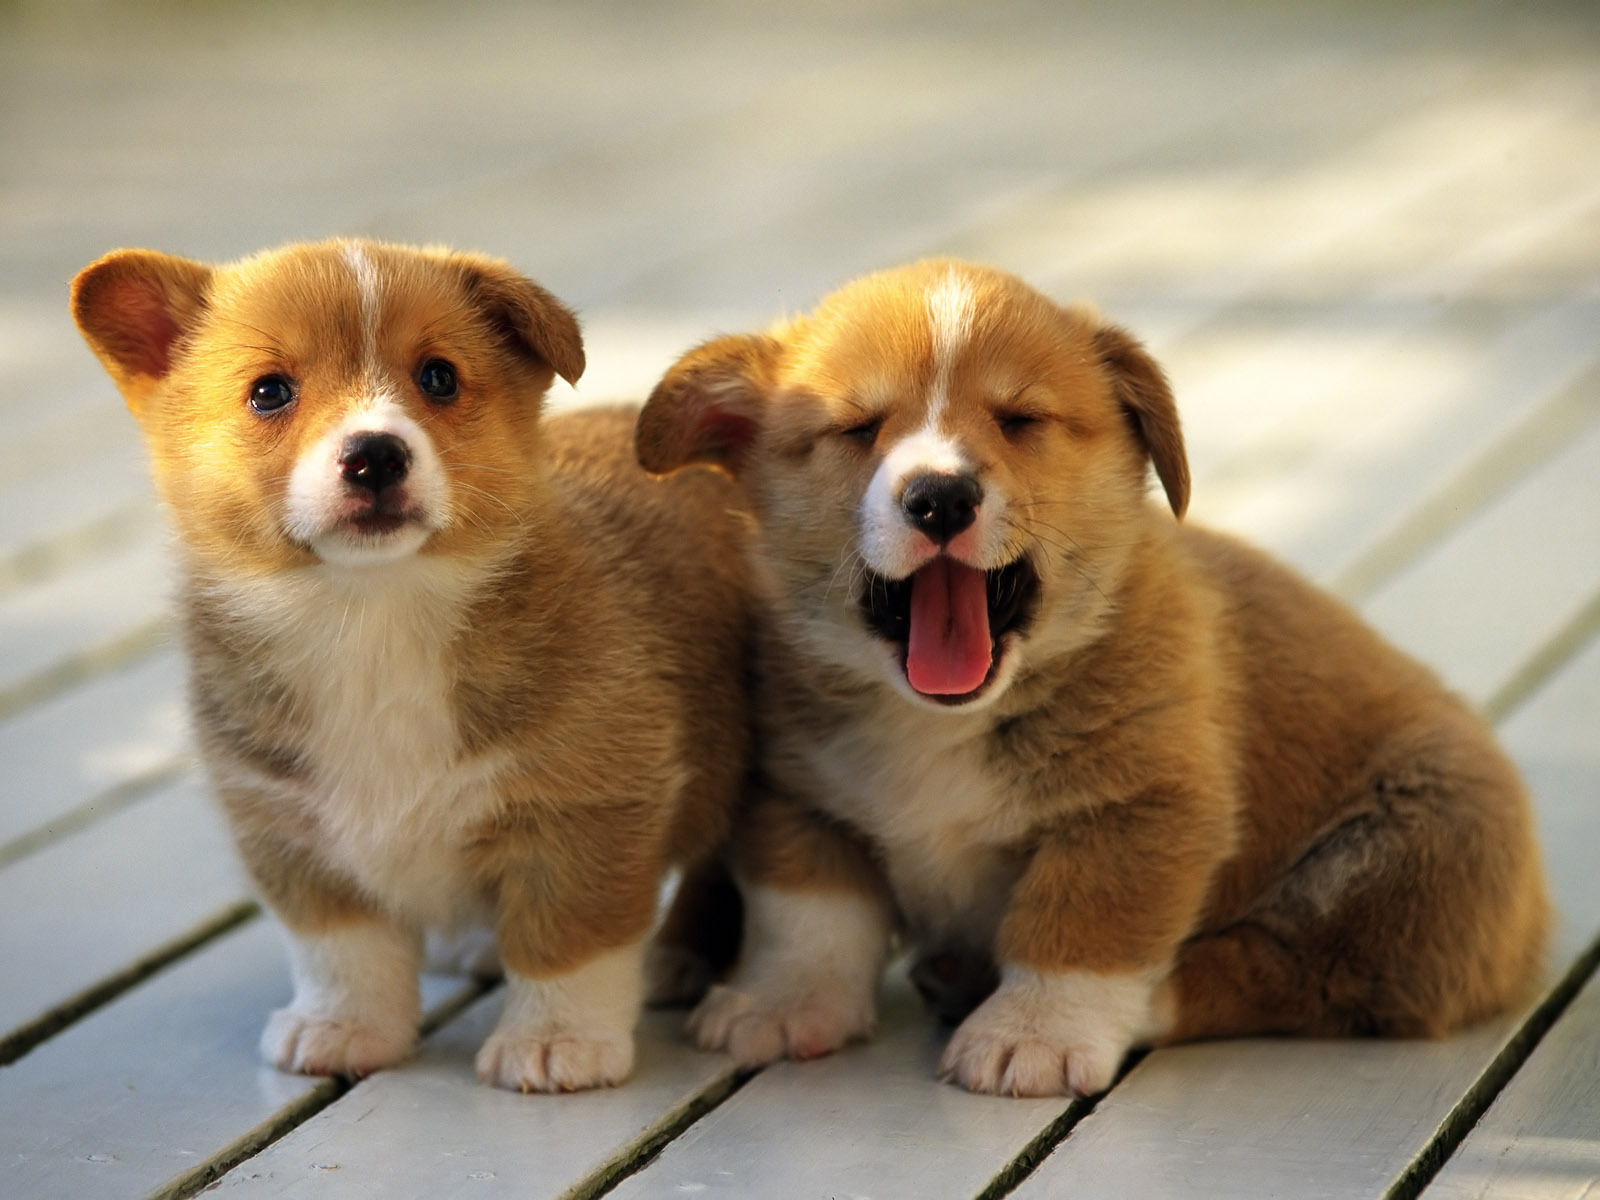 So-cute-puppies-14749029-1600-1200.jpg